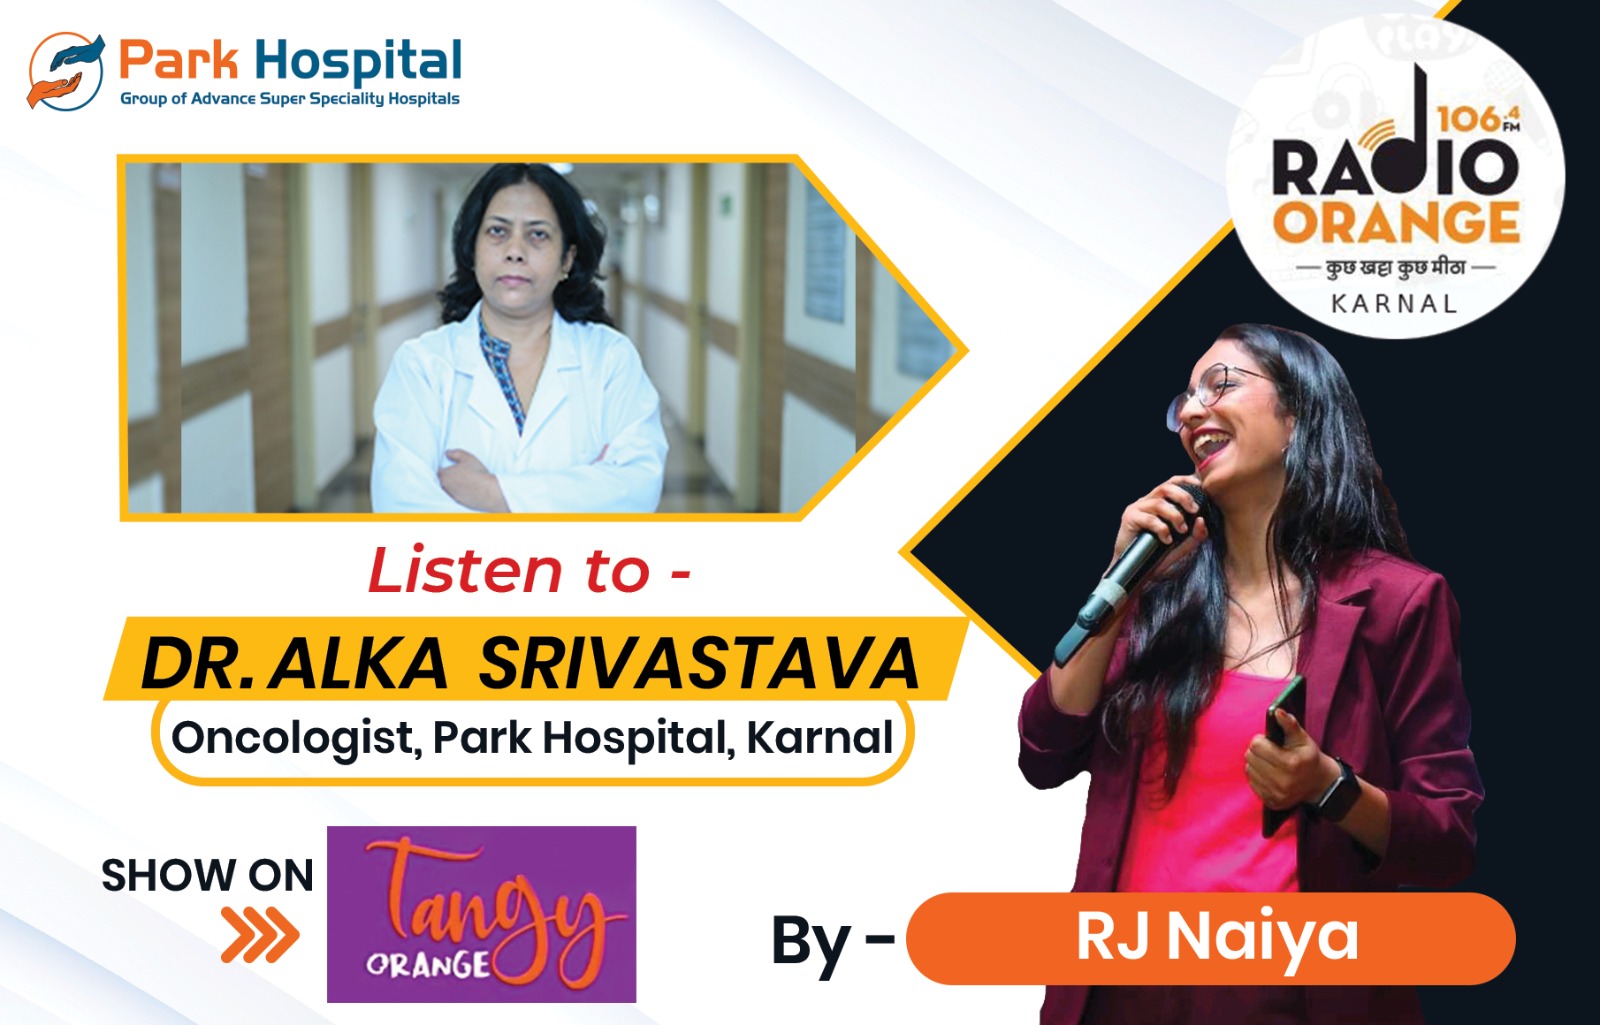 Dr. Alka Shrivastava n conversation with RJ Naiya on the show Tangy Orange